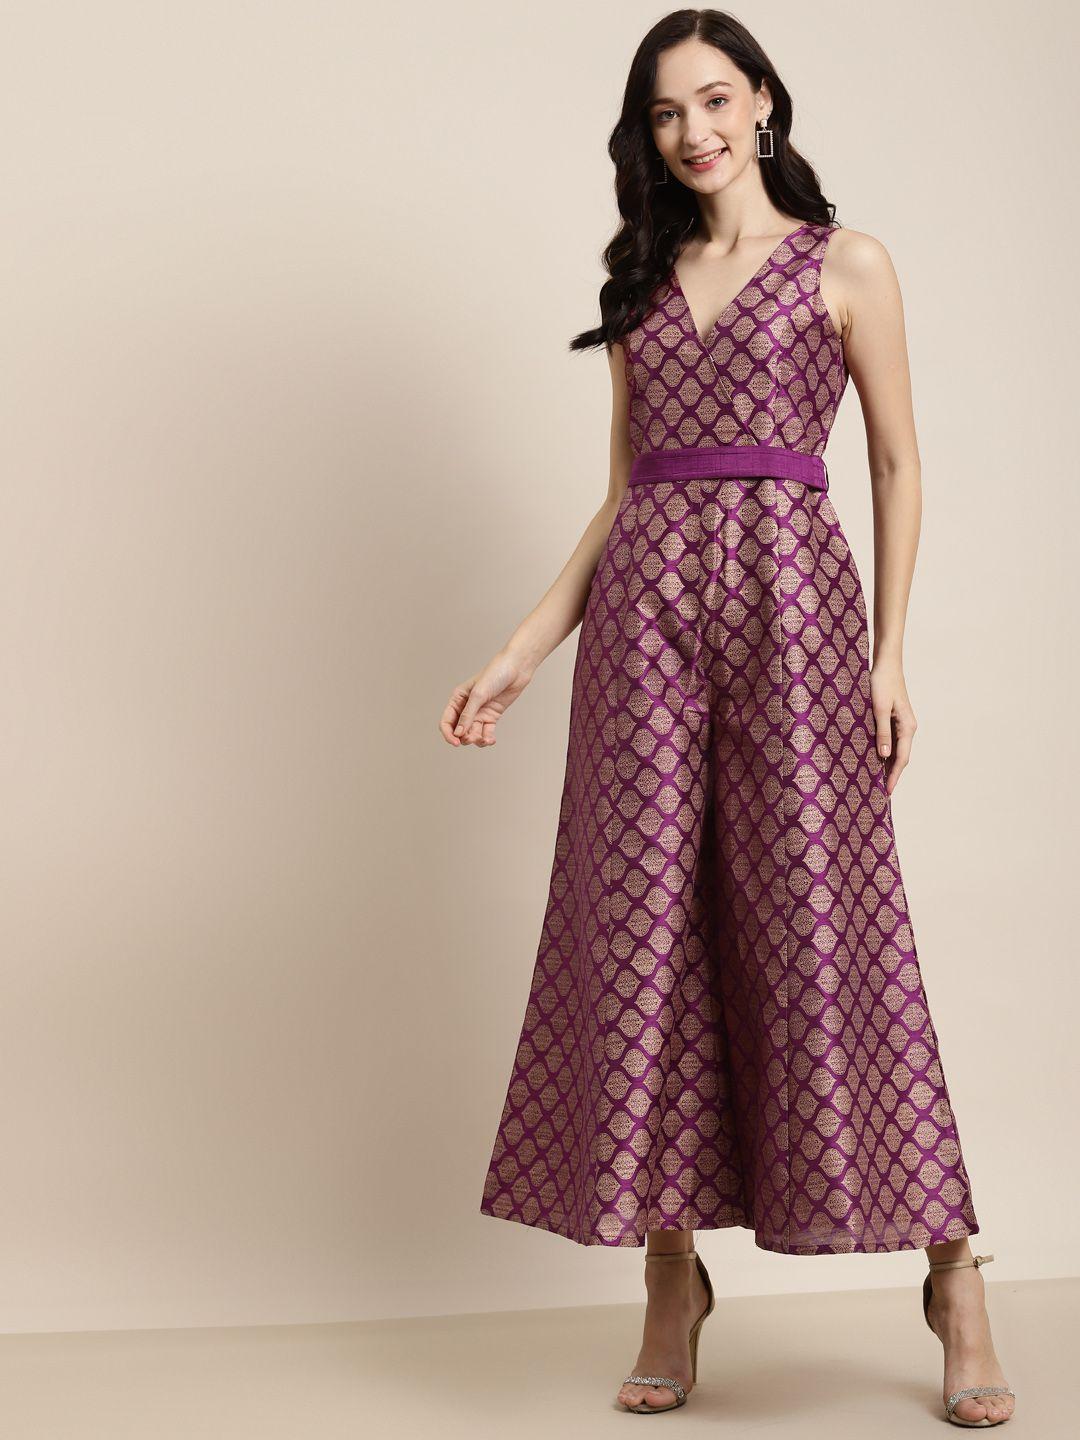 shae by sassafras purple & gold-toned printed fabric-belt basic jumpsuit